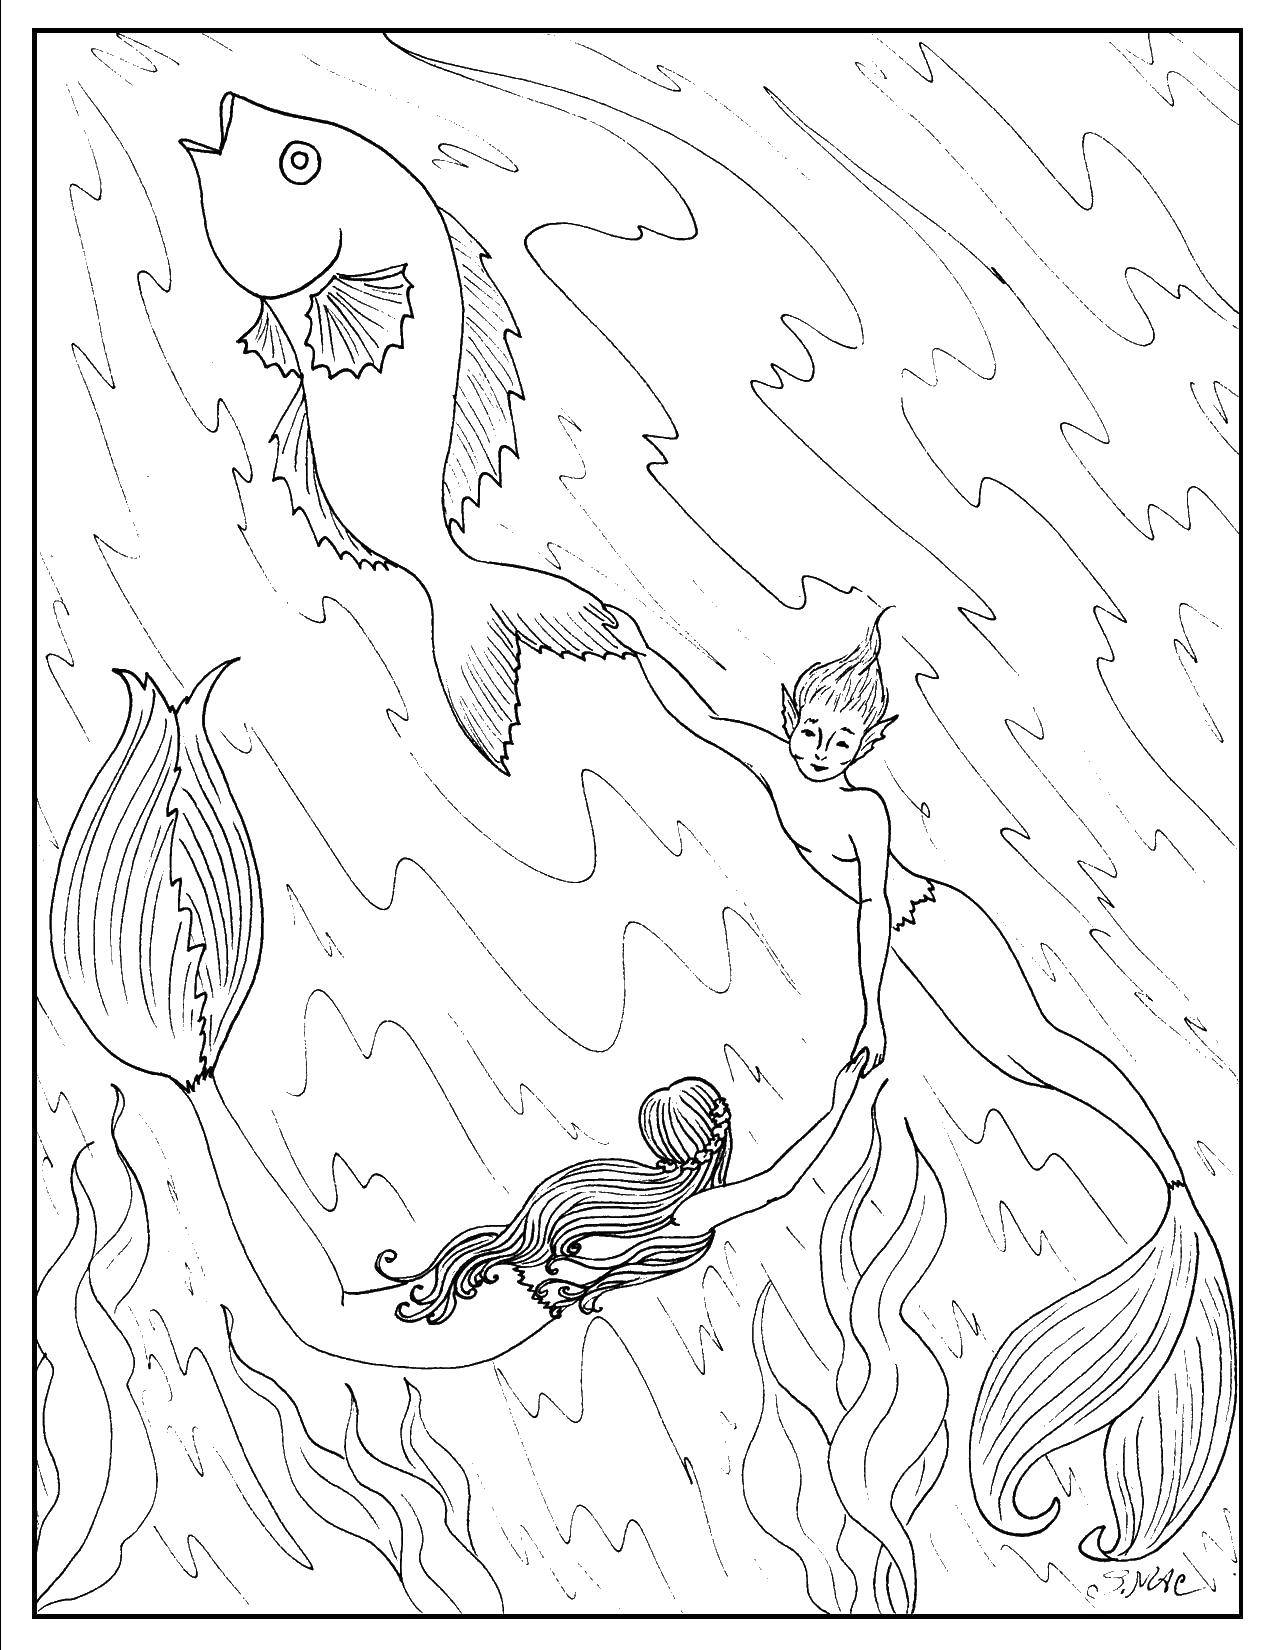 Coloring Mermaids and fish. Category marine. Tags:  marine inhabitants, the sea, fish, mermaids.